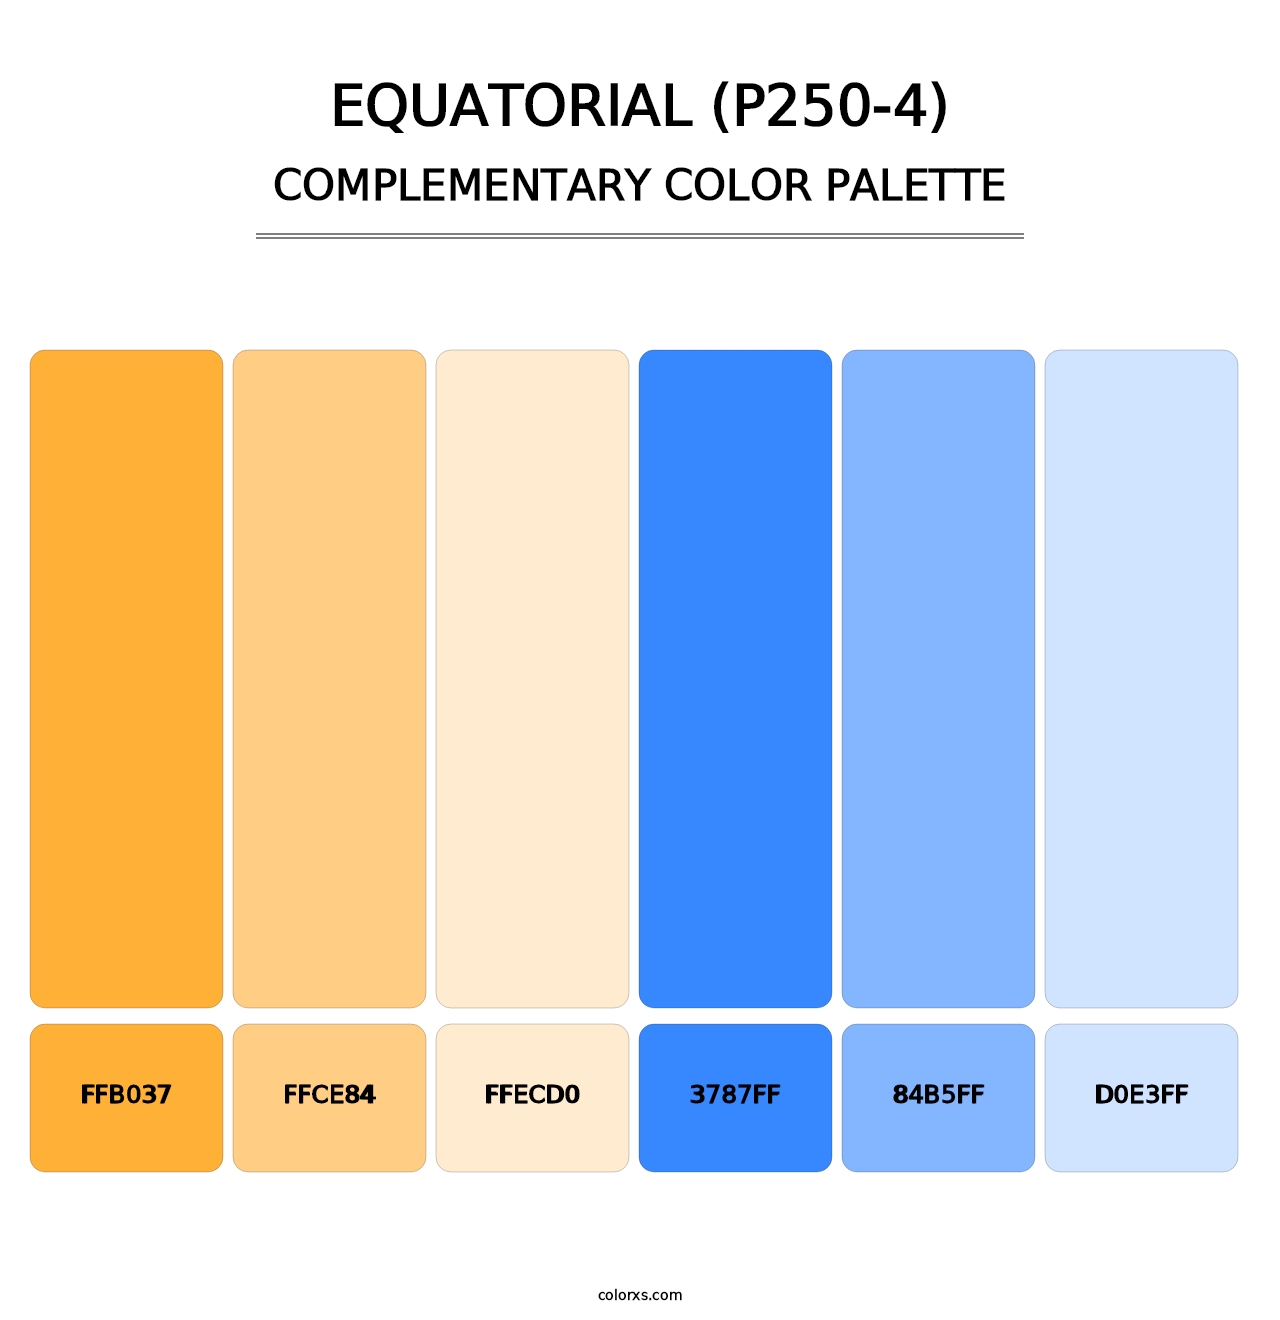 Equatorial (P250-4) - Complementary Color Palette